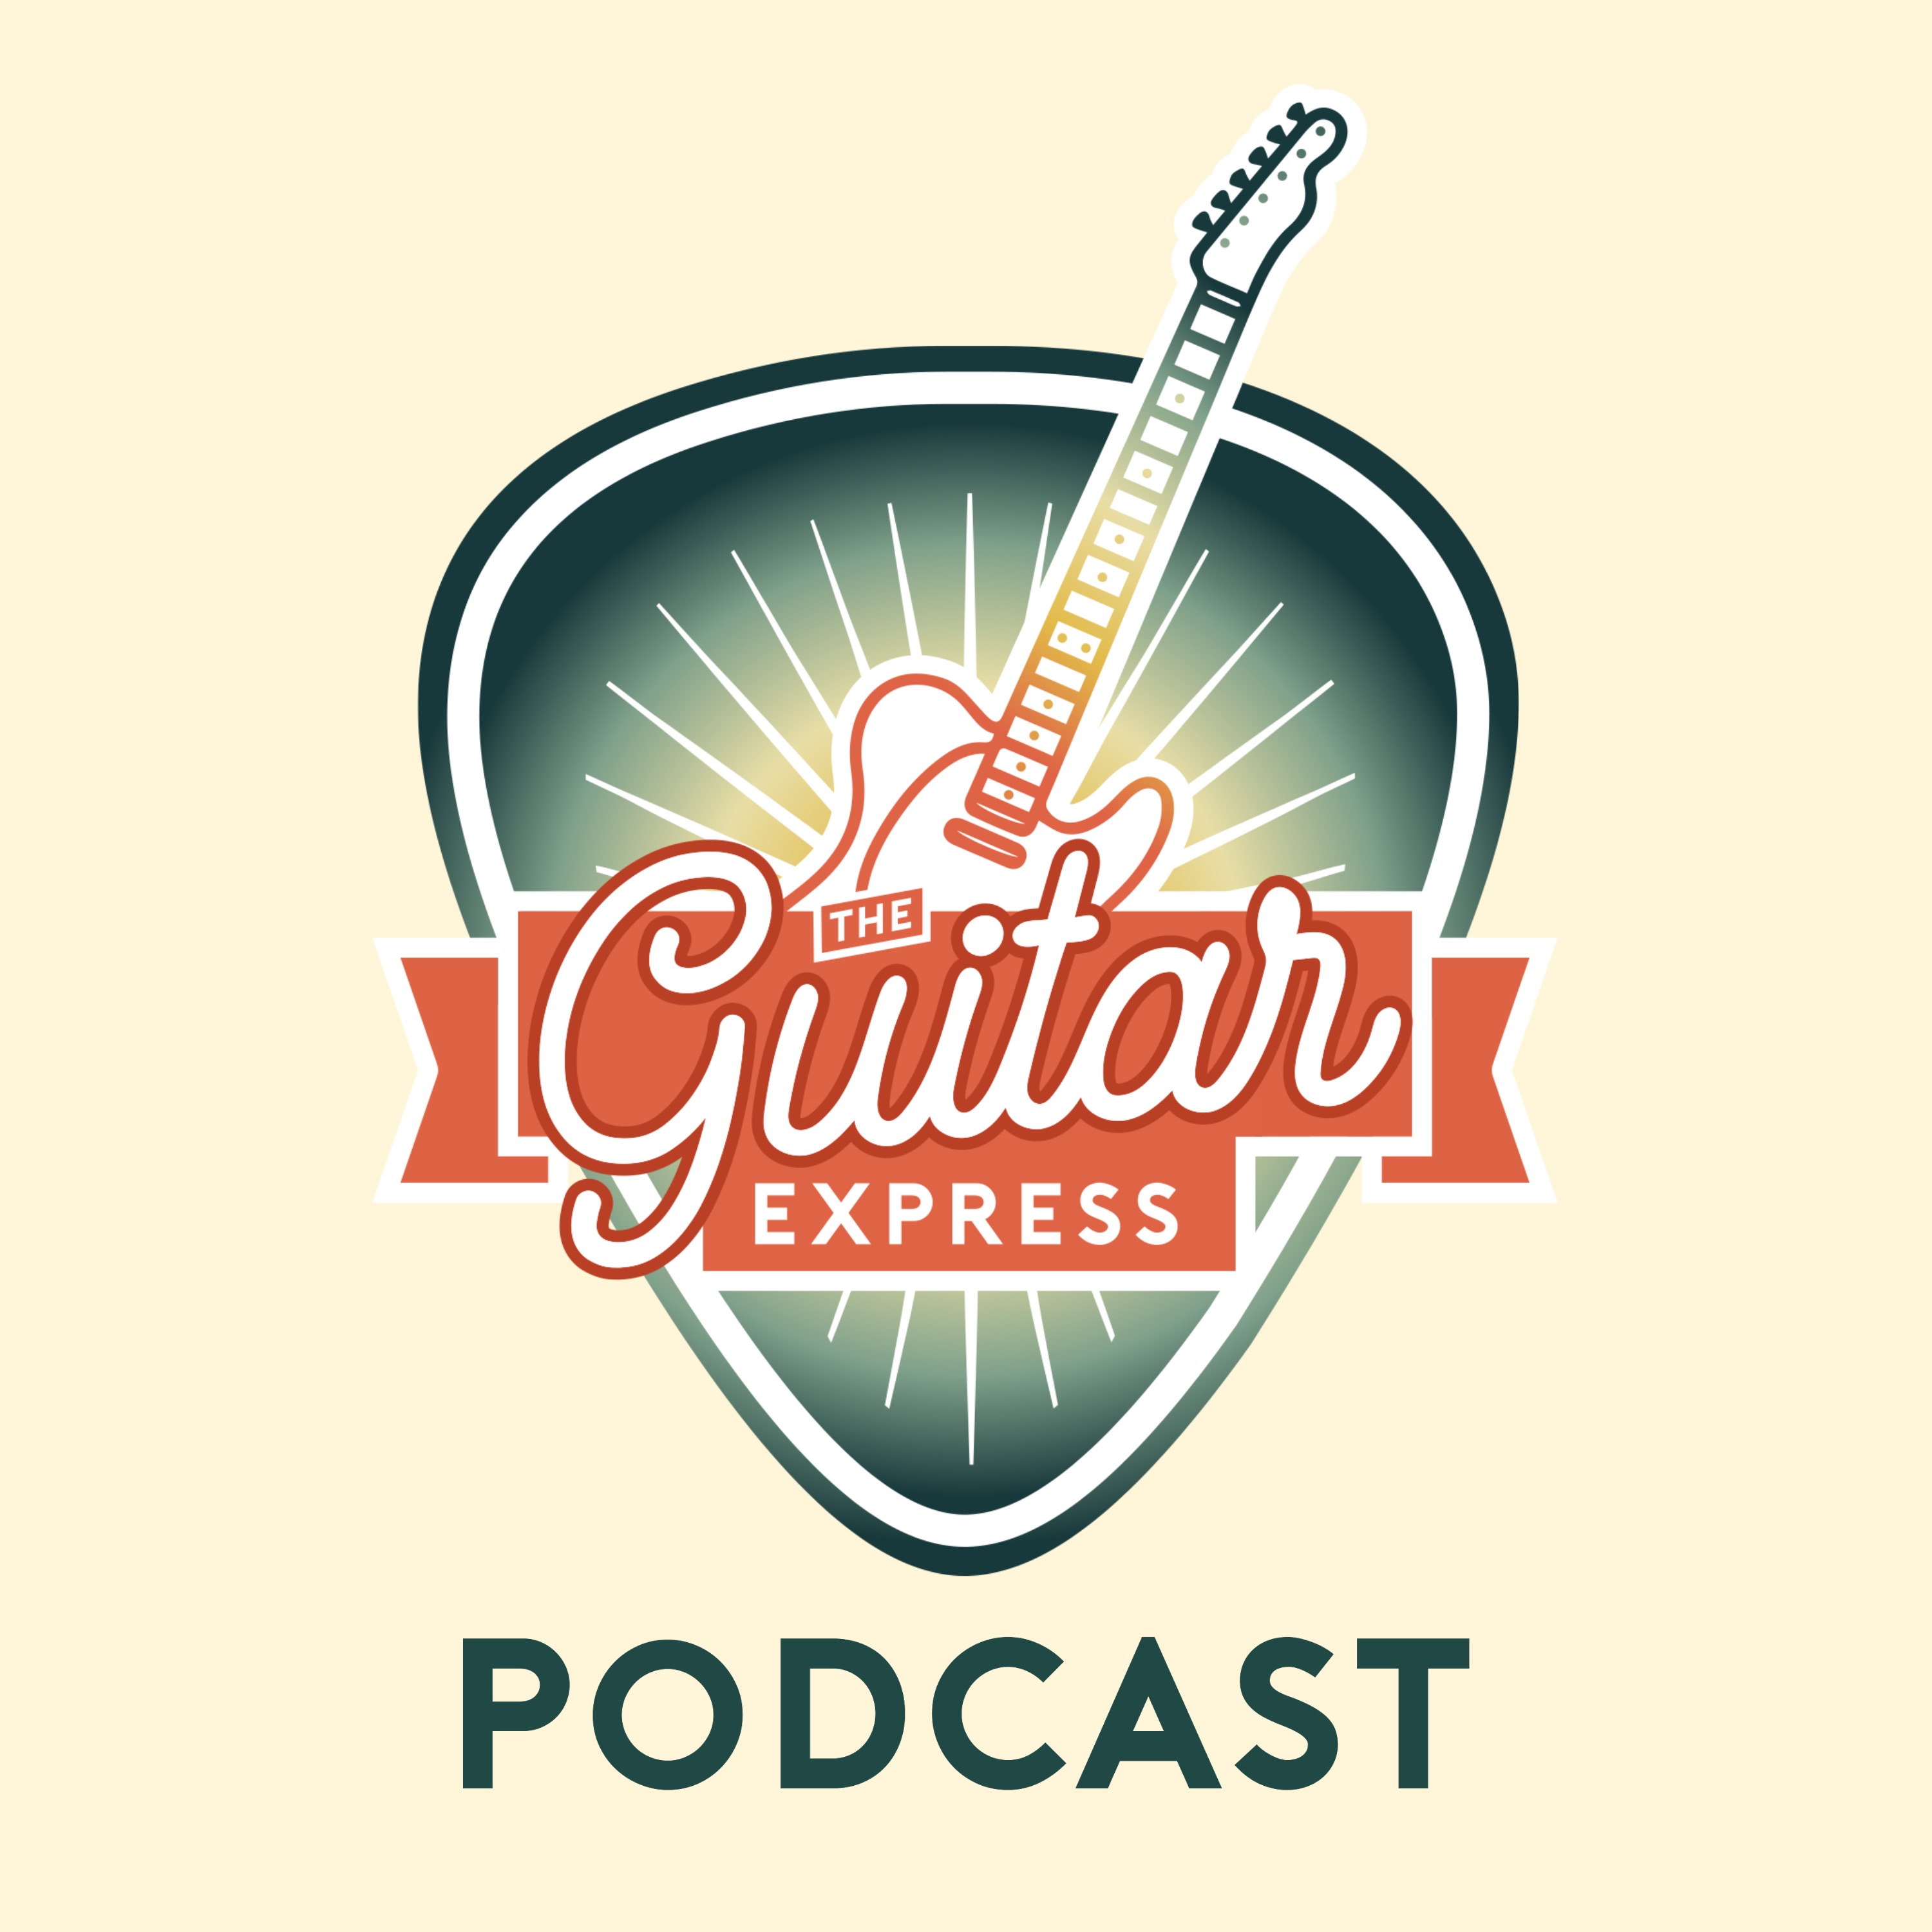 The Guitar Express logo